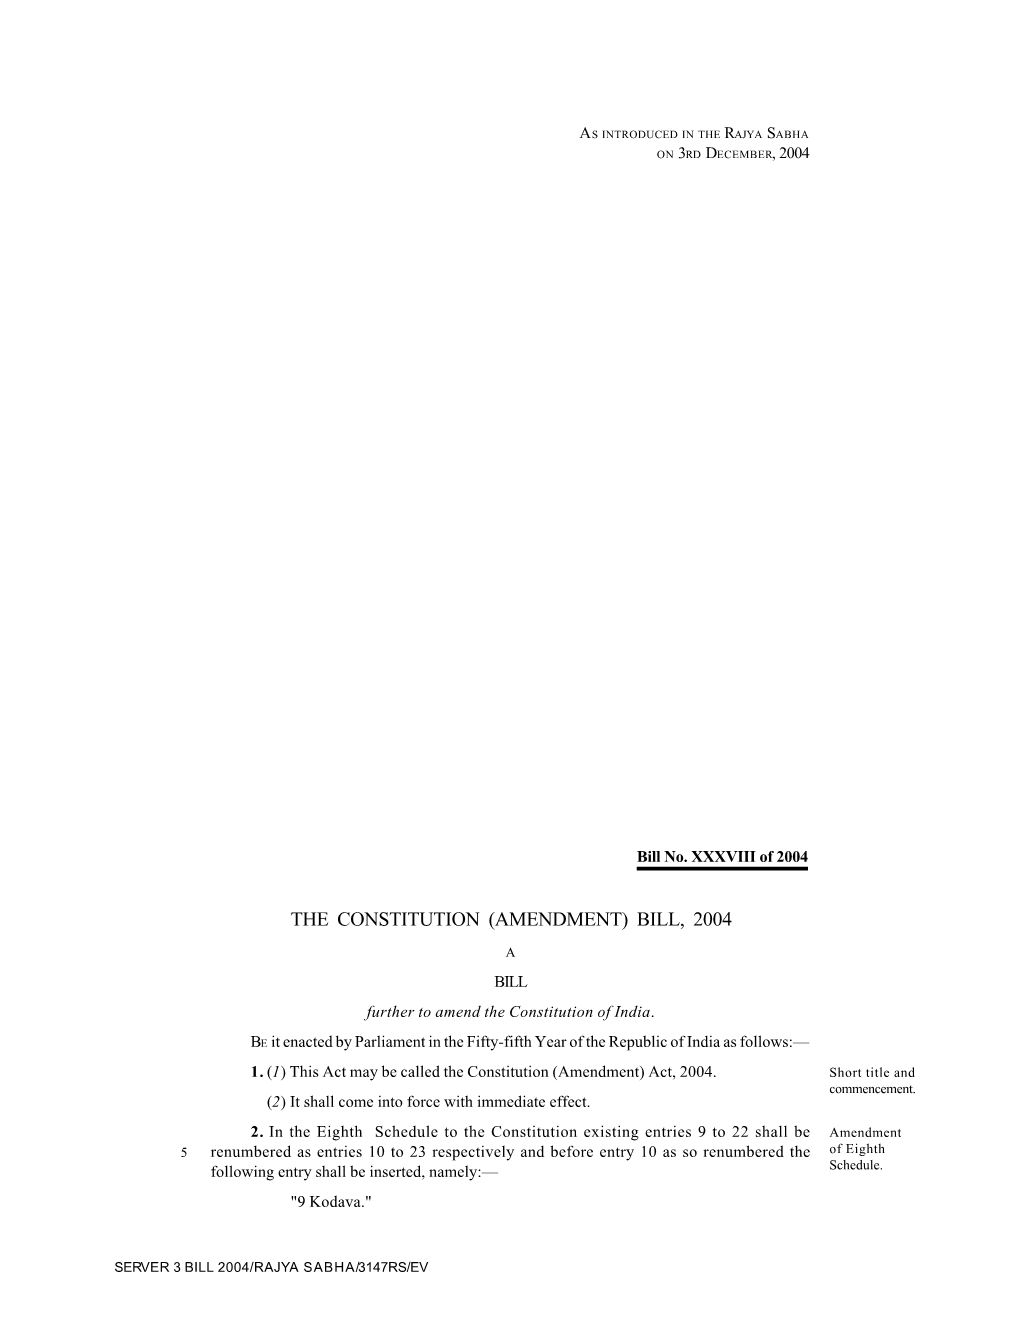 The Constitution (Amendment) Bill, 2004